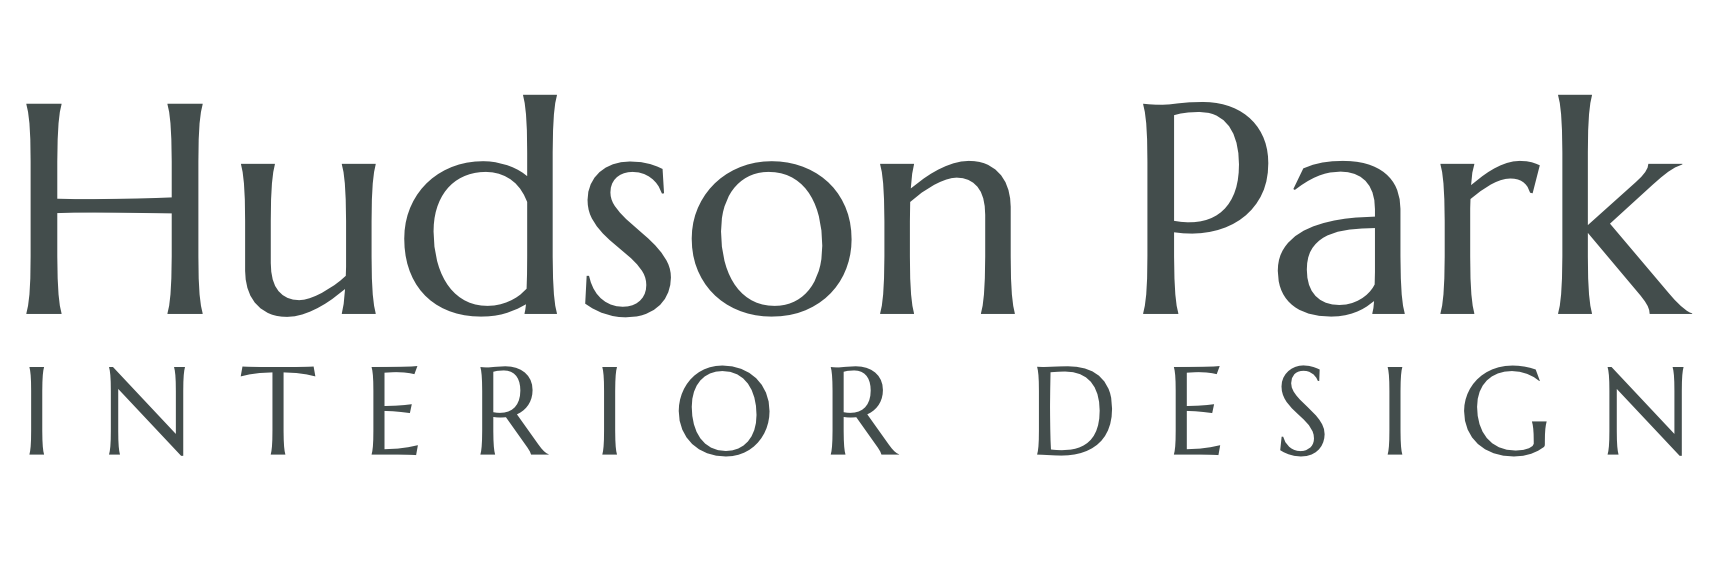 Hudson Park Interior Design logo